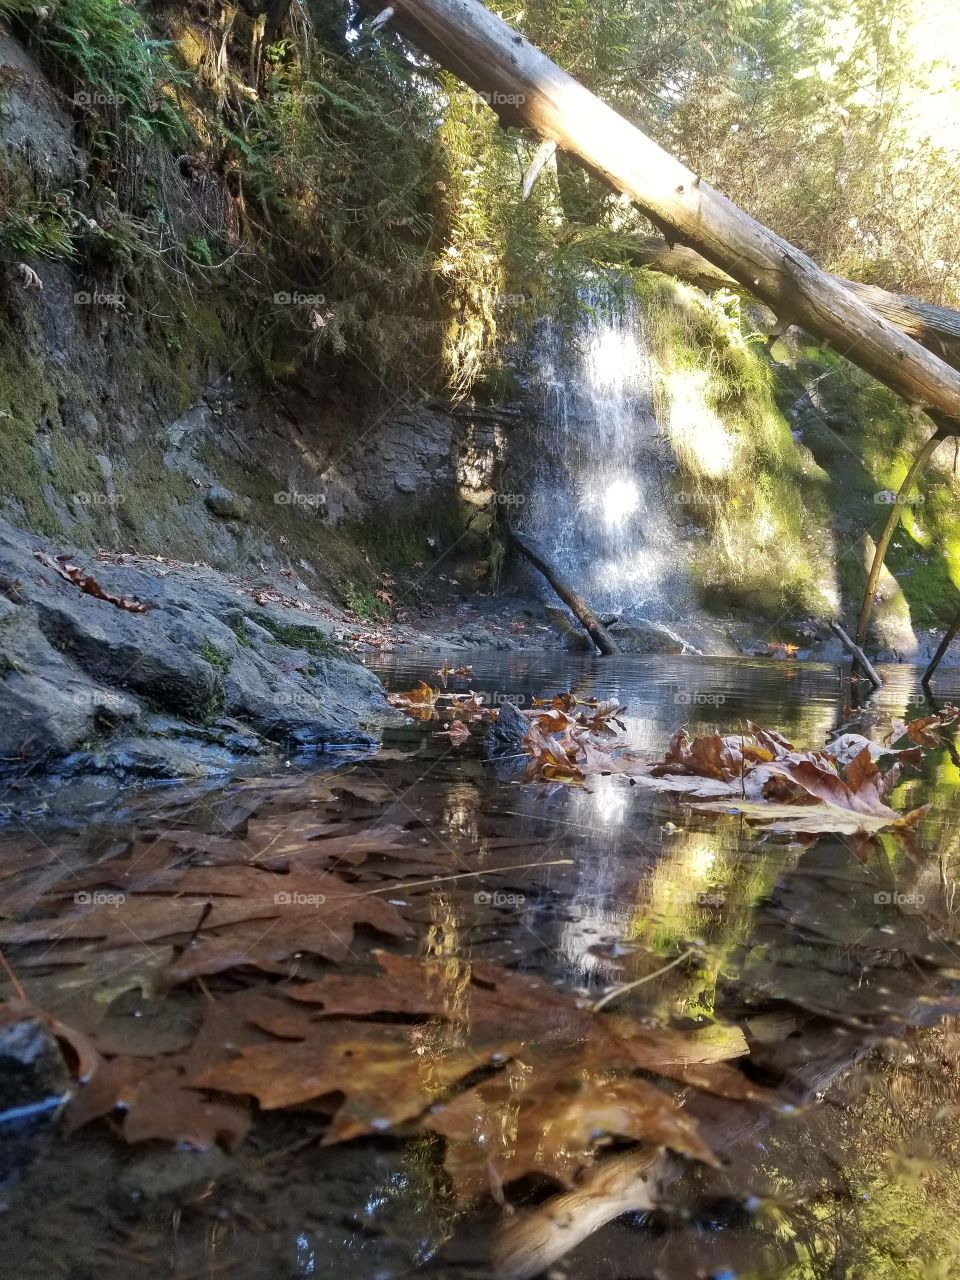 Cherry Creek falls